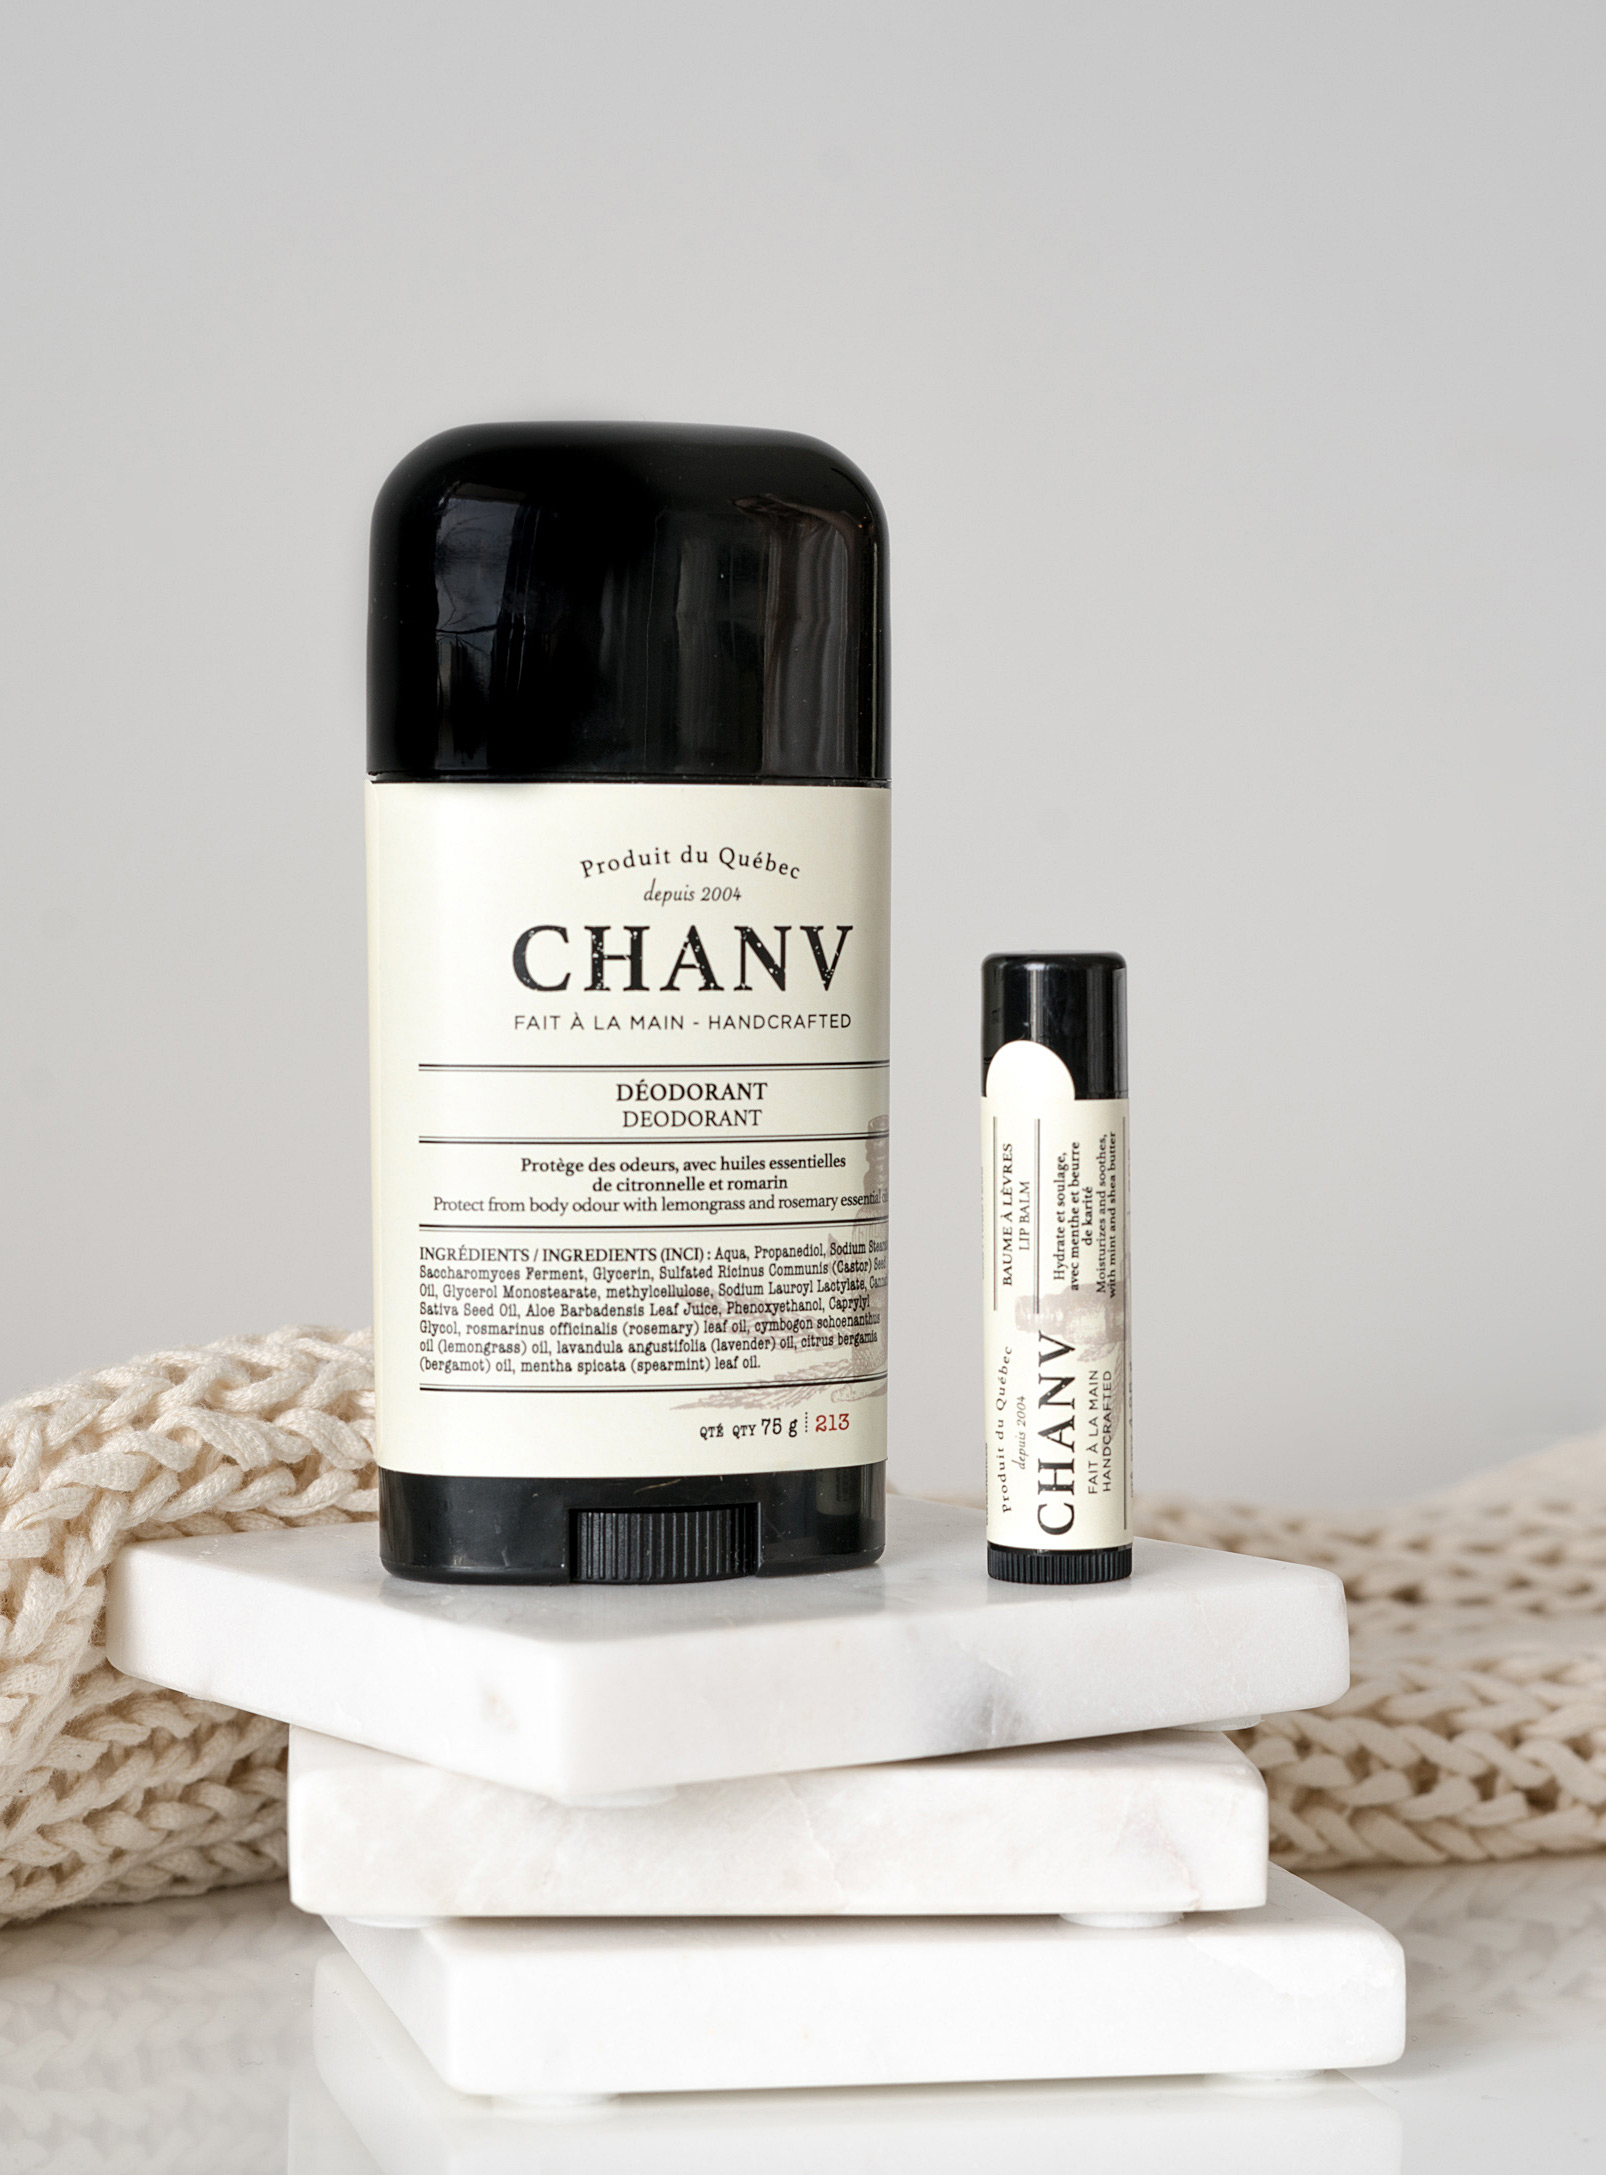 Chanv - Deodorant and lip balm set